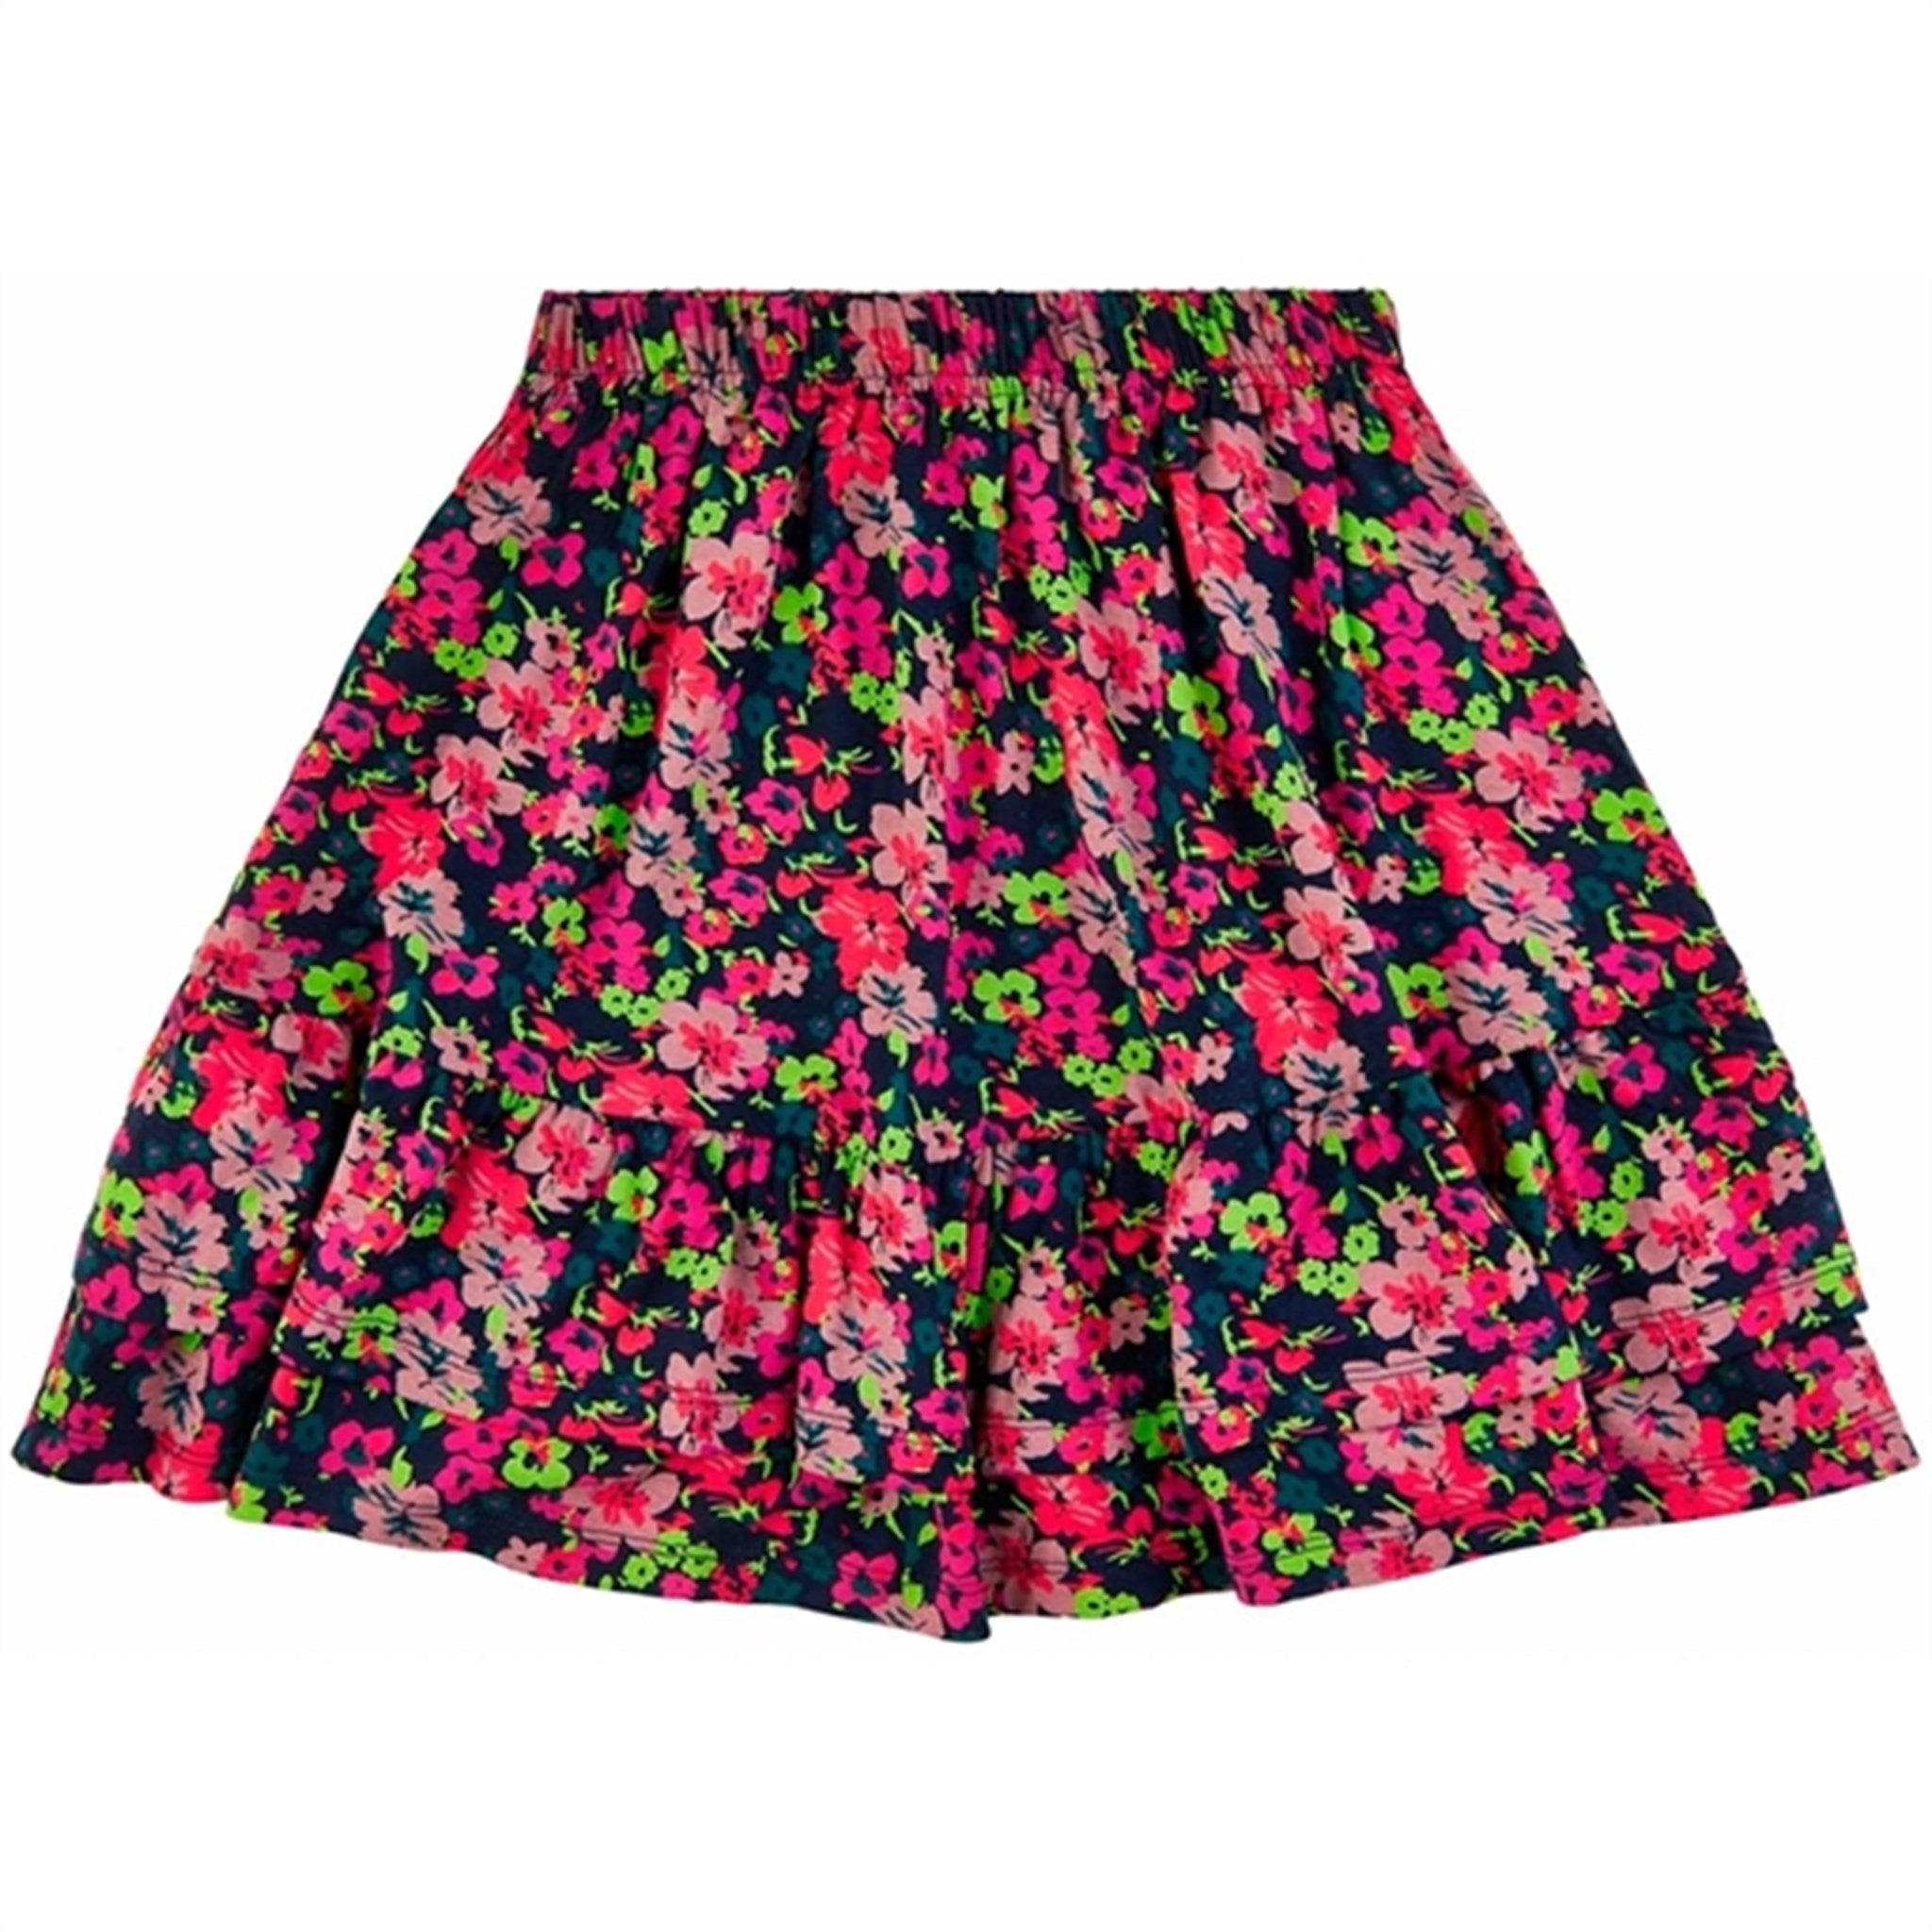 The New AOP Flower Donna Skirt